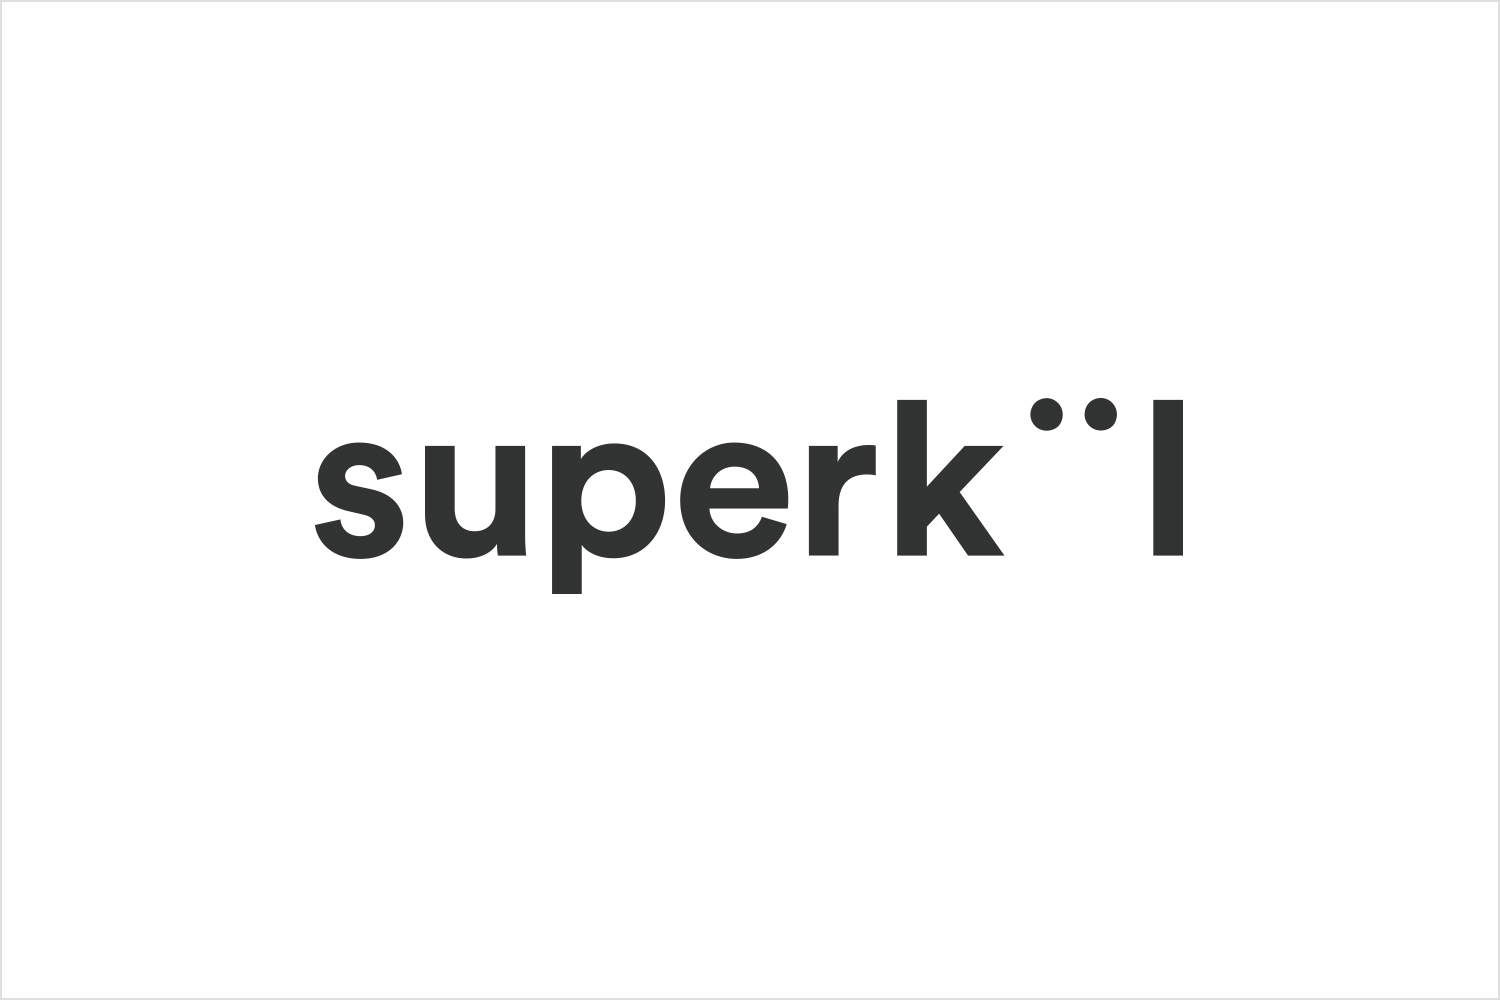 Wordmark by Toronto-based graphic design studio Blok for Canadian architecture firm Superkül